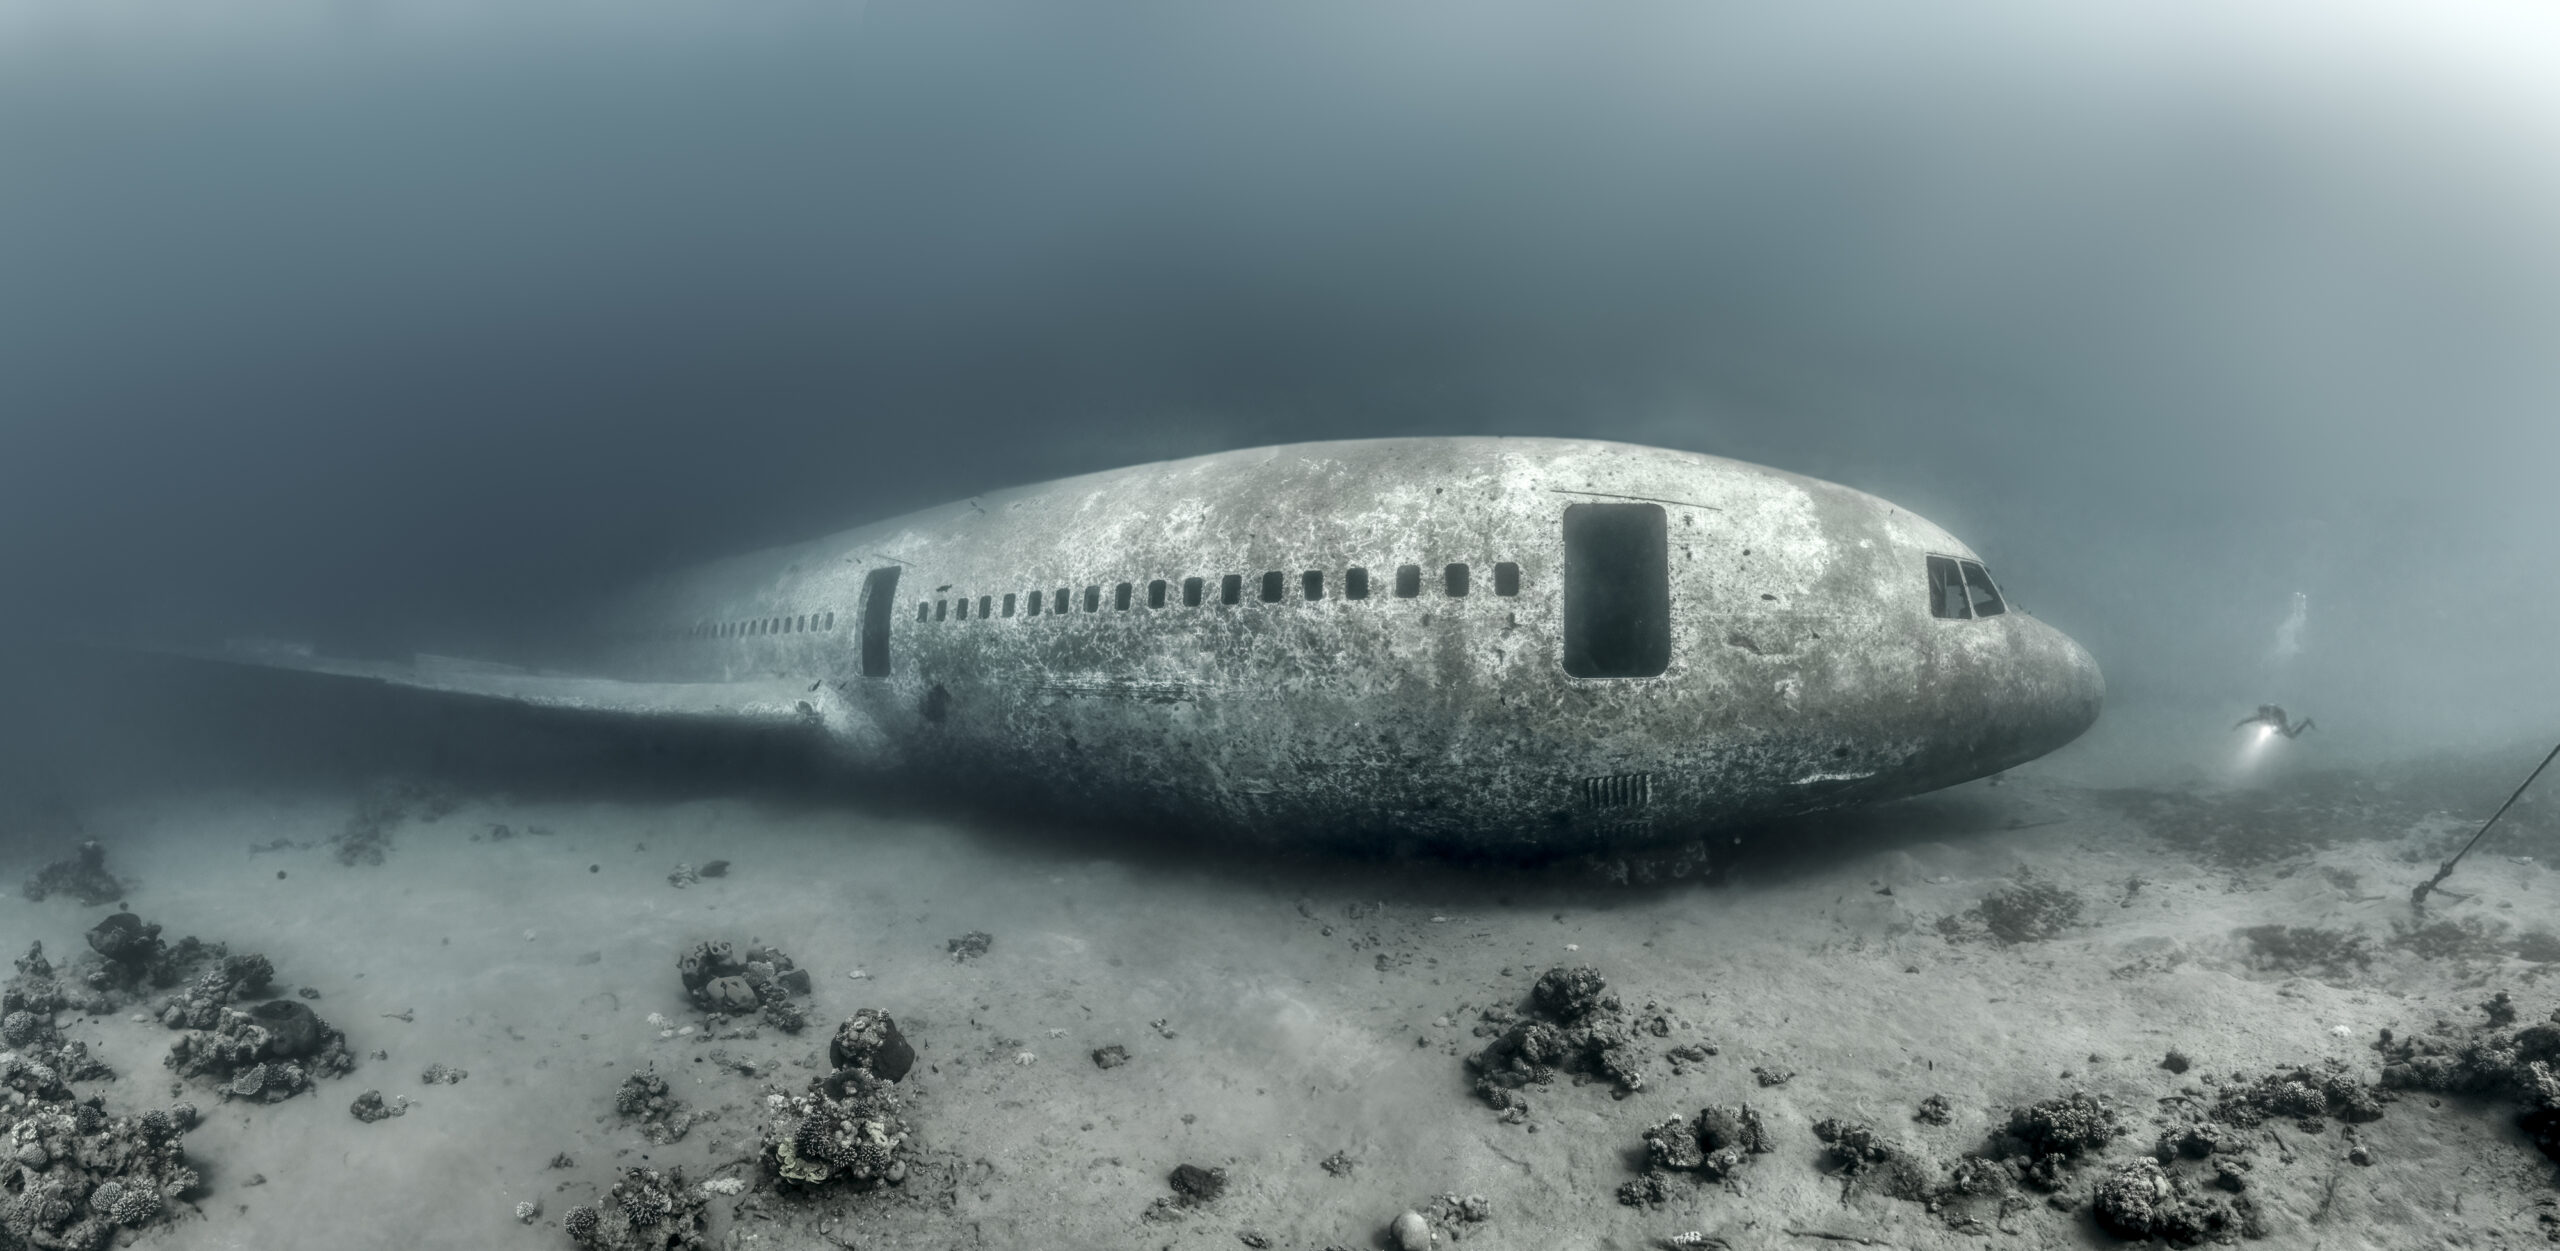 Scuba diver exploring sunken plane